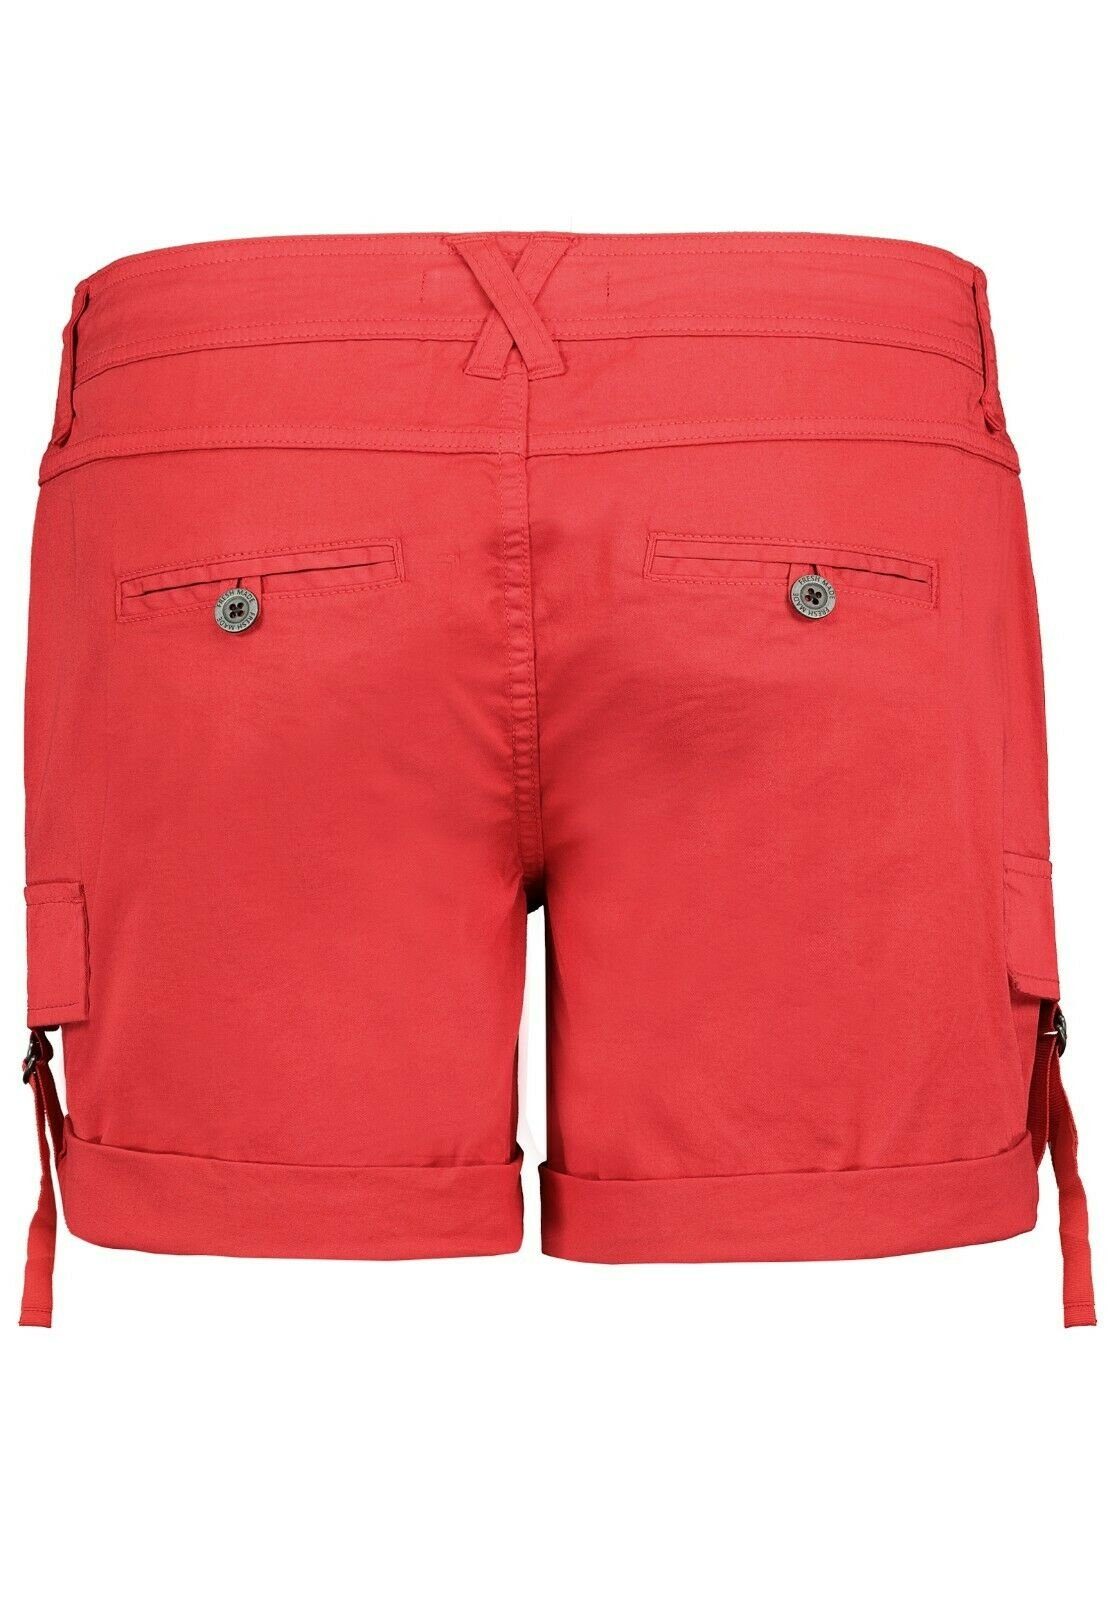 Bermudas Fresh Bermuda Hotpants Short Hose Shorts Sommer Made Kurze Rot